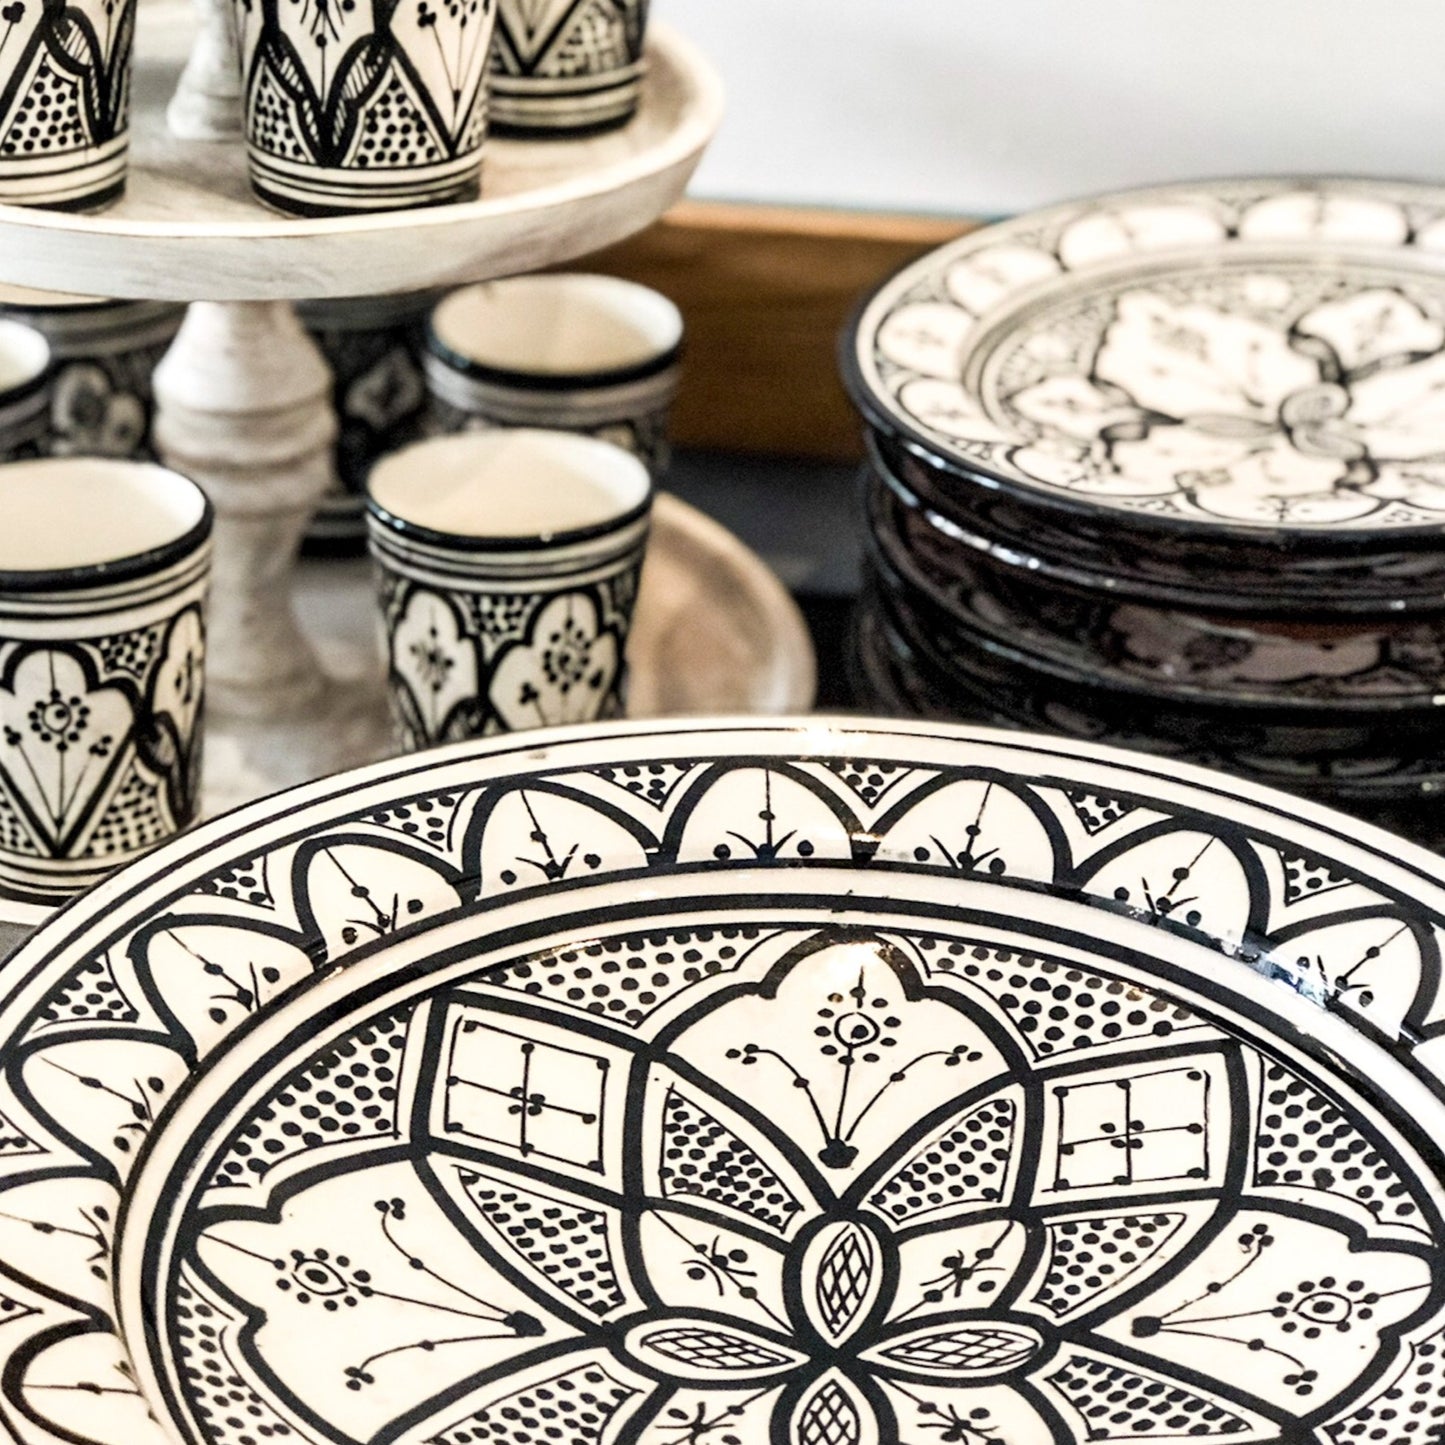 Extra Large Moroccan "Zwak"Ceramic Plate in Monochrome